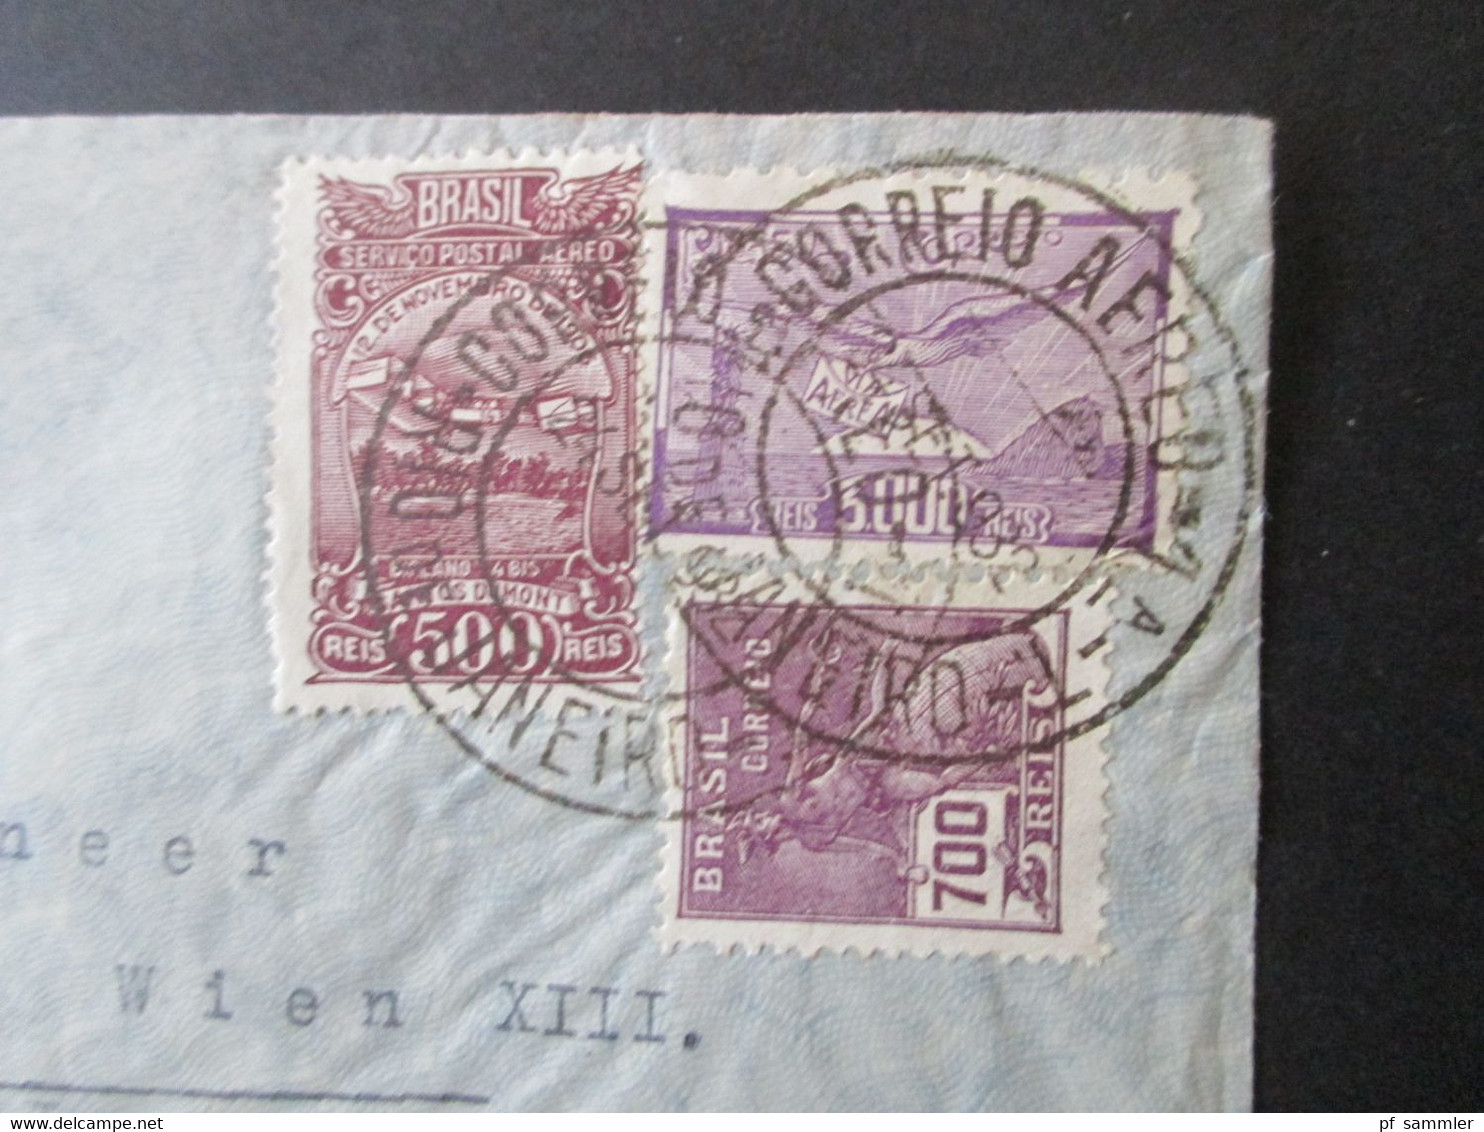 Brasilien 1932 Luftpostbeleg Violetter Stempel Via Aeropostale Mit Flugpostmarke Nr. 337 Nach Wien Gesendet - Lettres & Documents